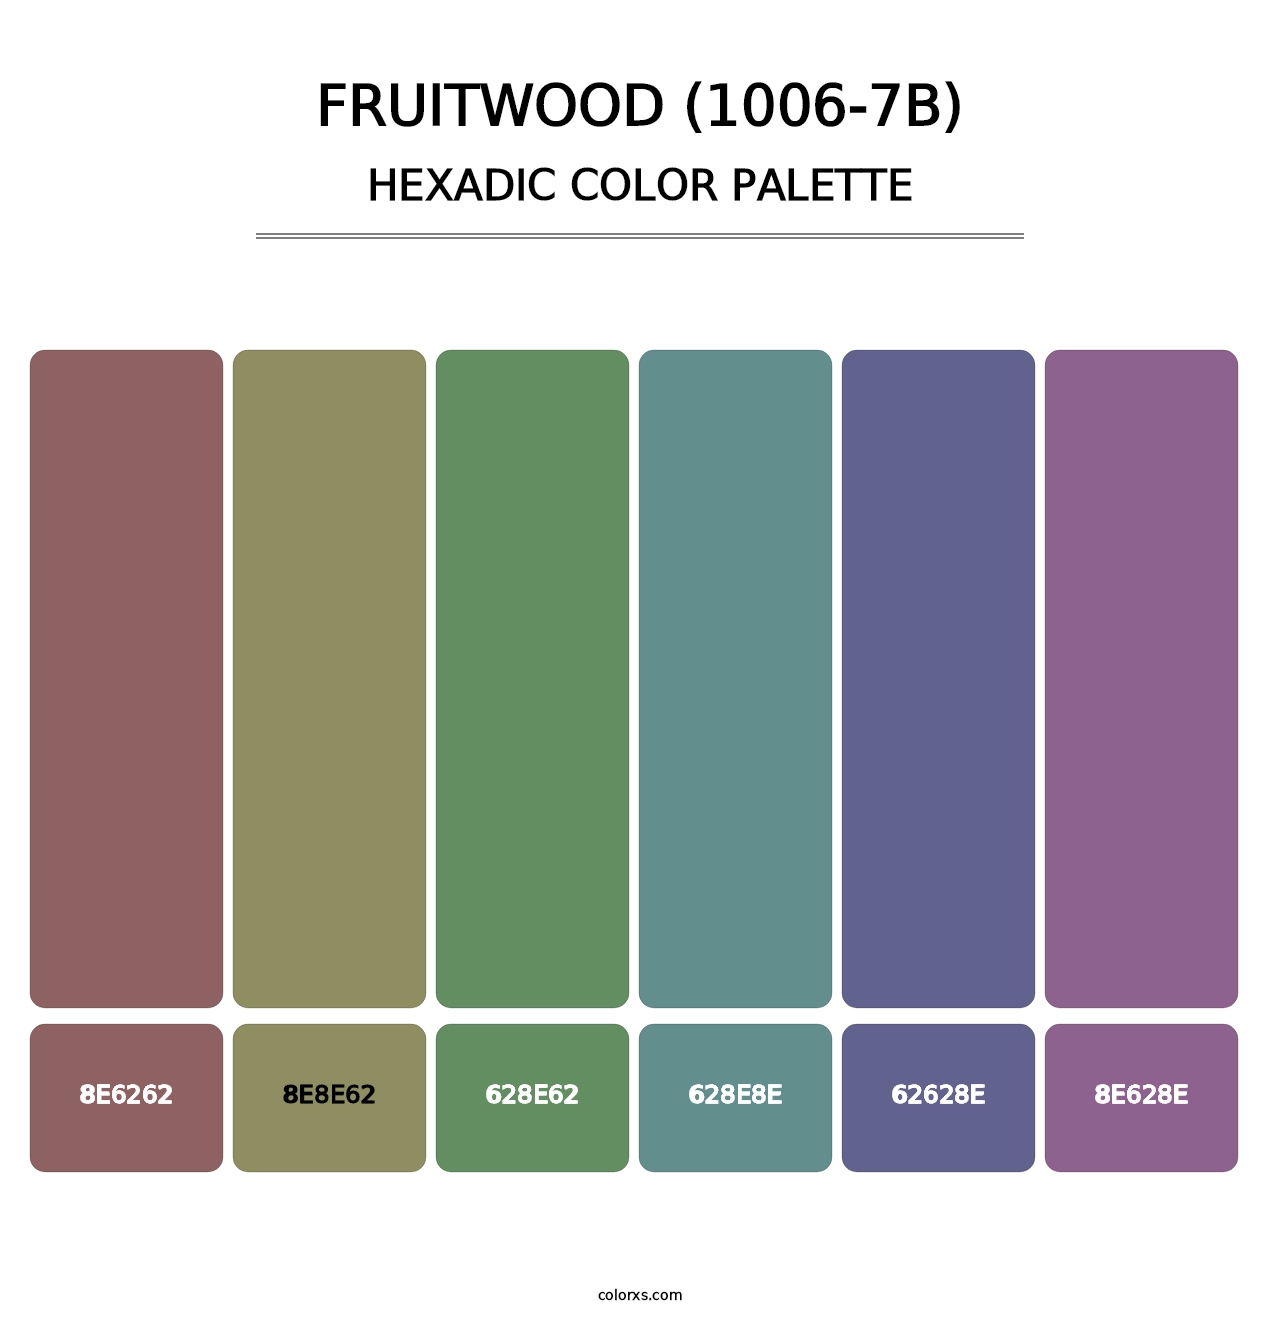 Fruitwood (1006-7B) - Hexadic Color Palette